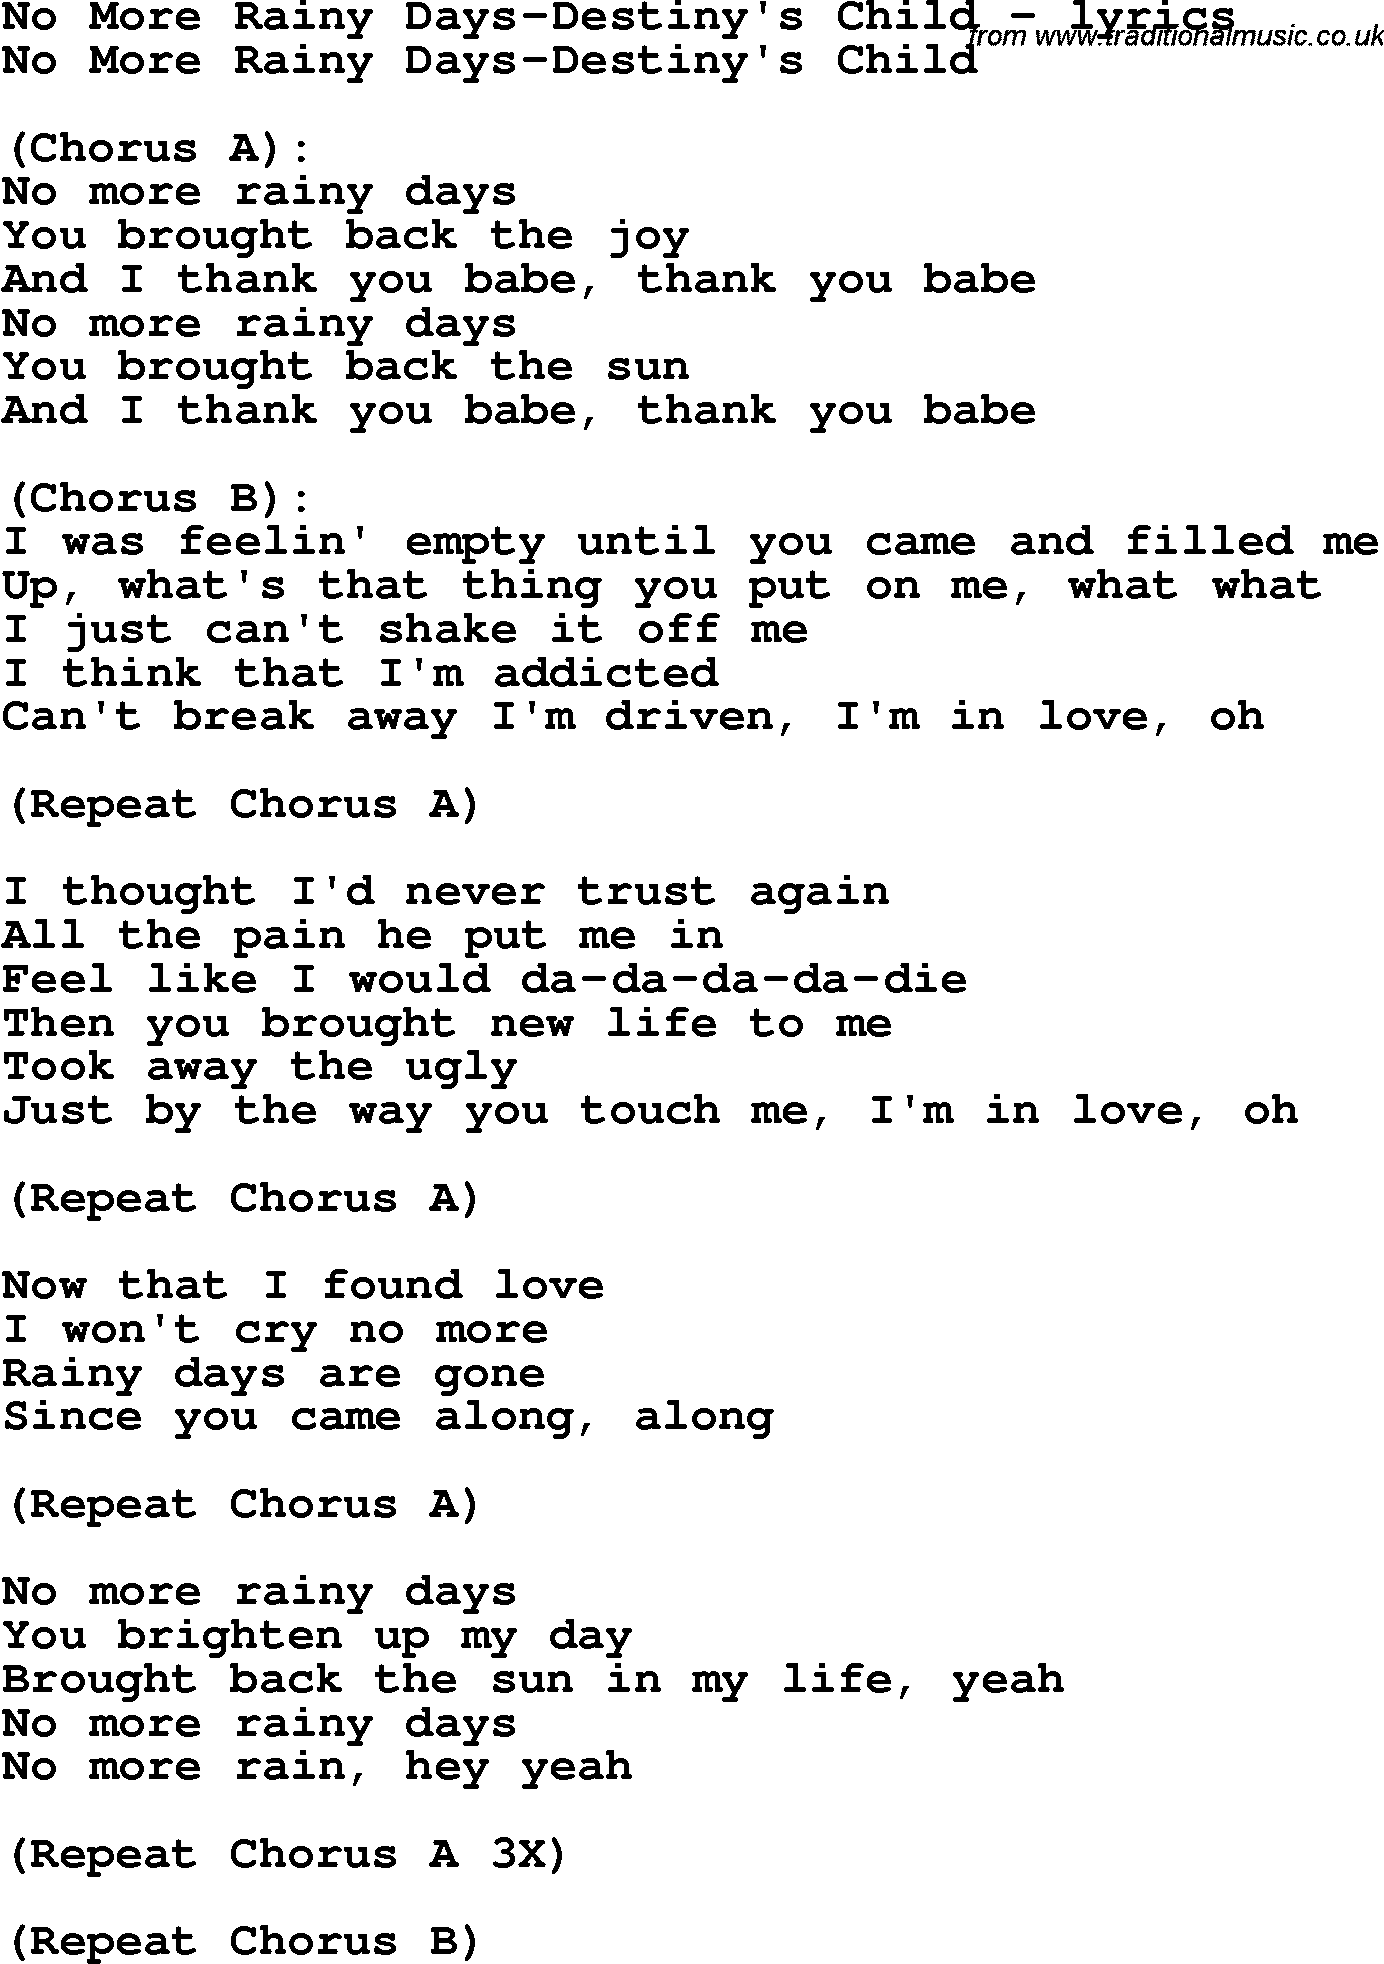 Love Song Lyrics for: No More Rainy Days-Destiny's Child